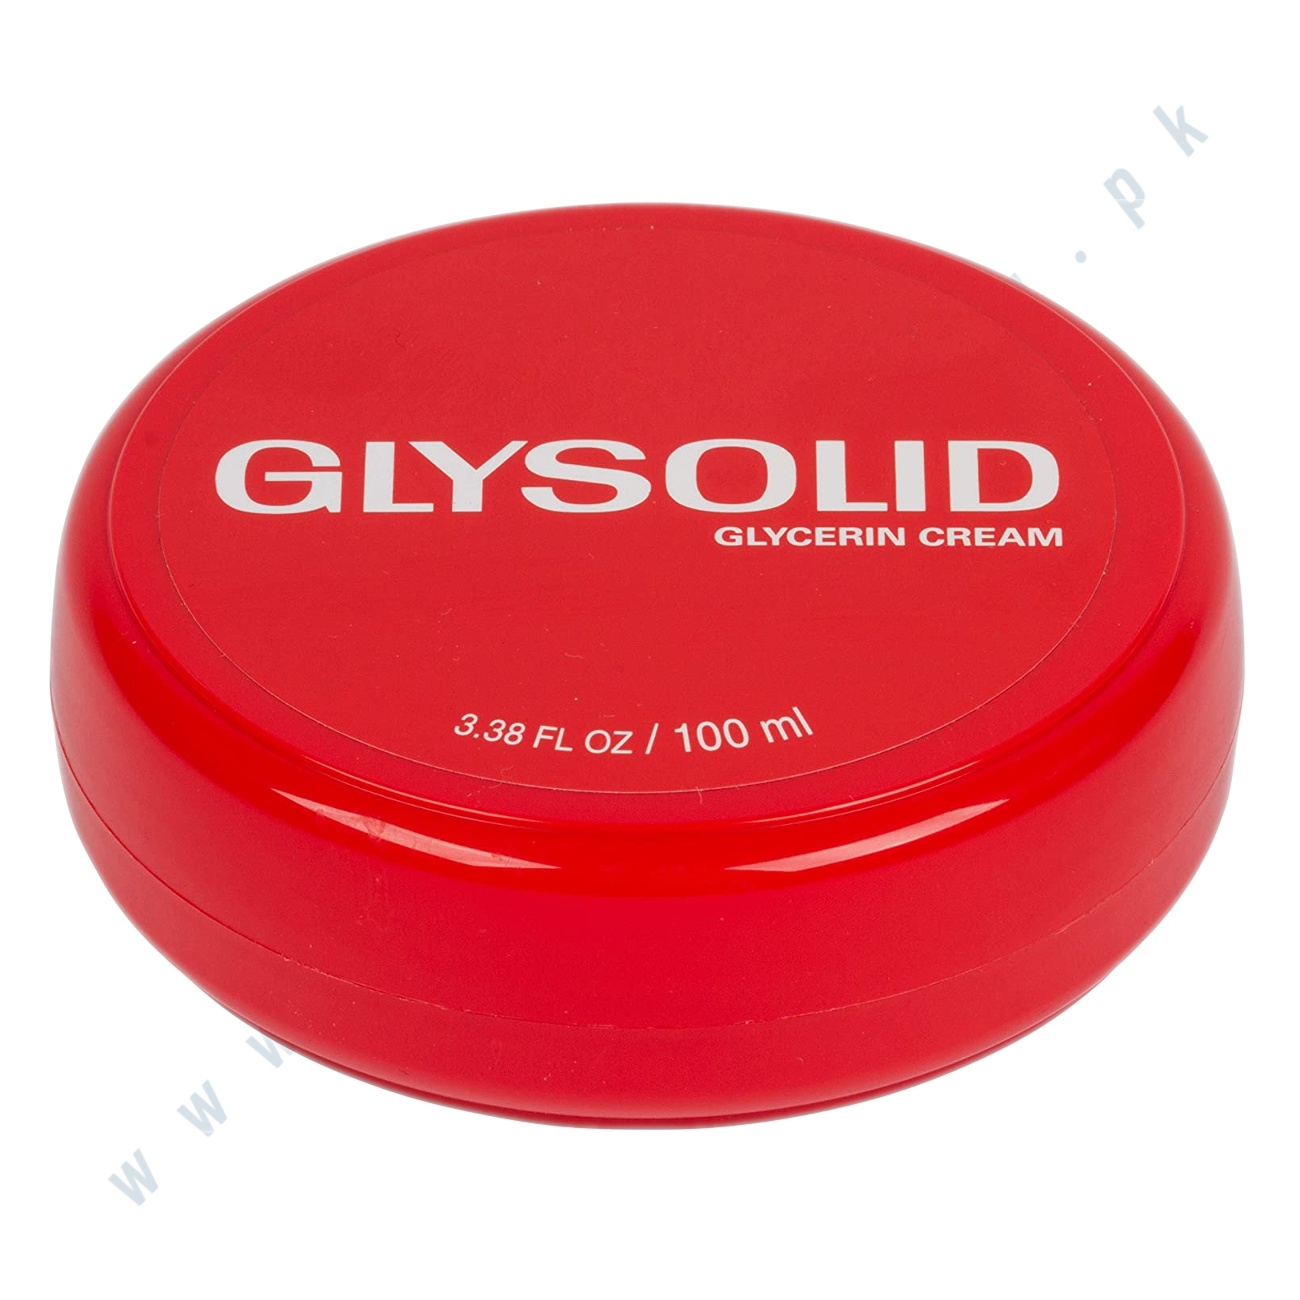 Glysolid Glycerin Skin Cream: The Trusted Formula 